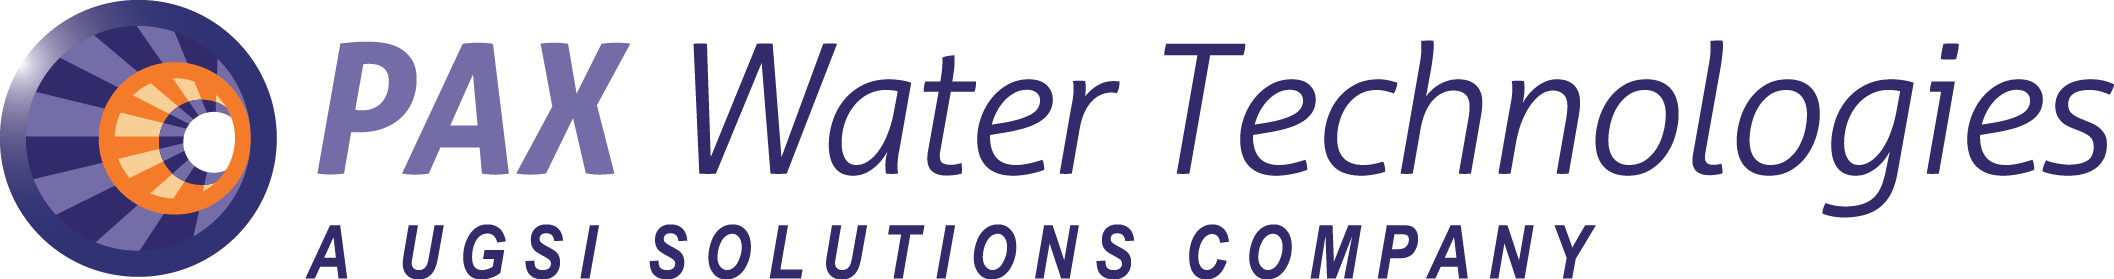 PAX-Water_Technologies_logo_CMYK-2